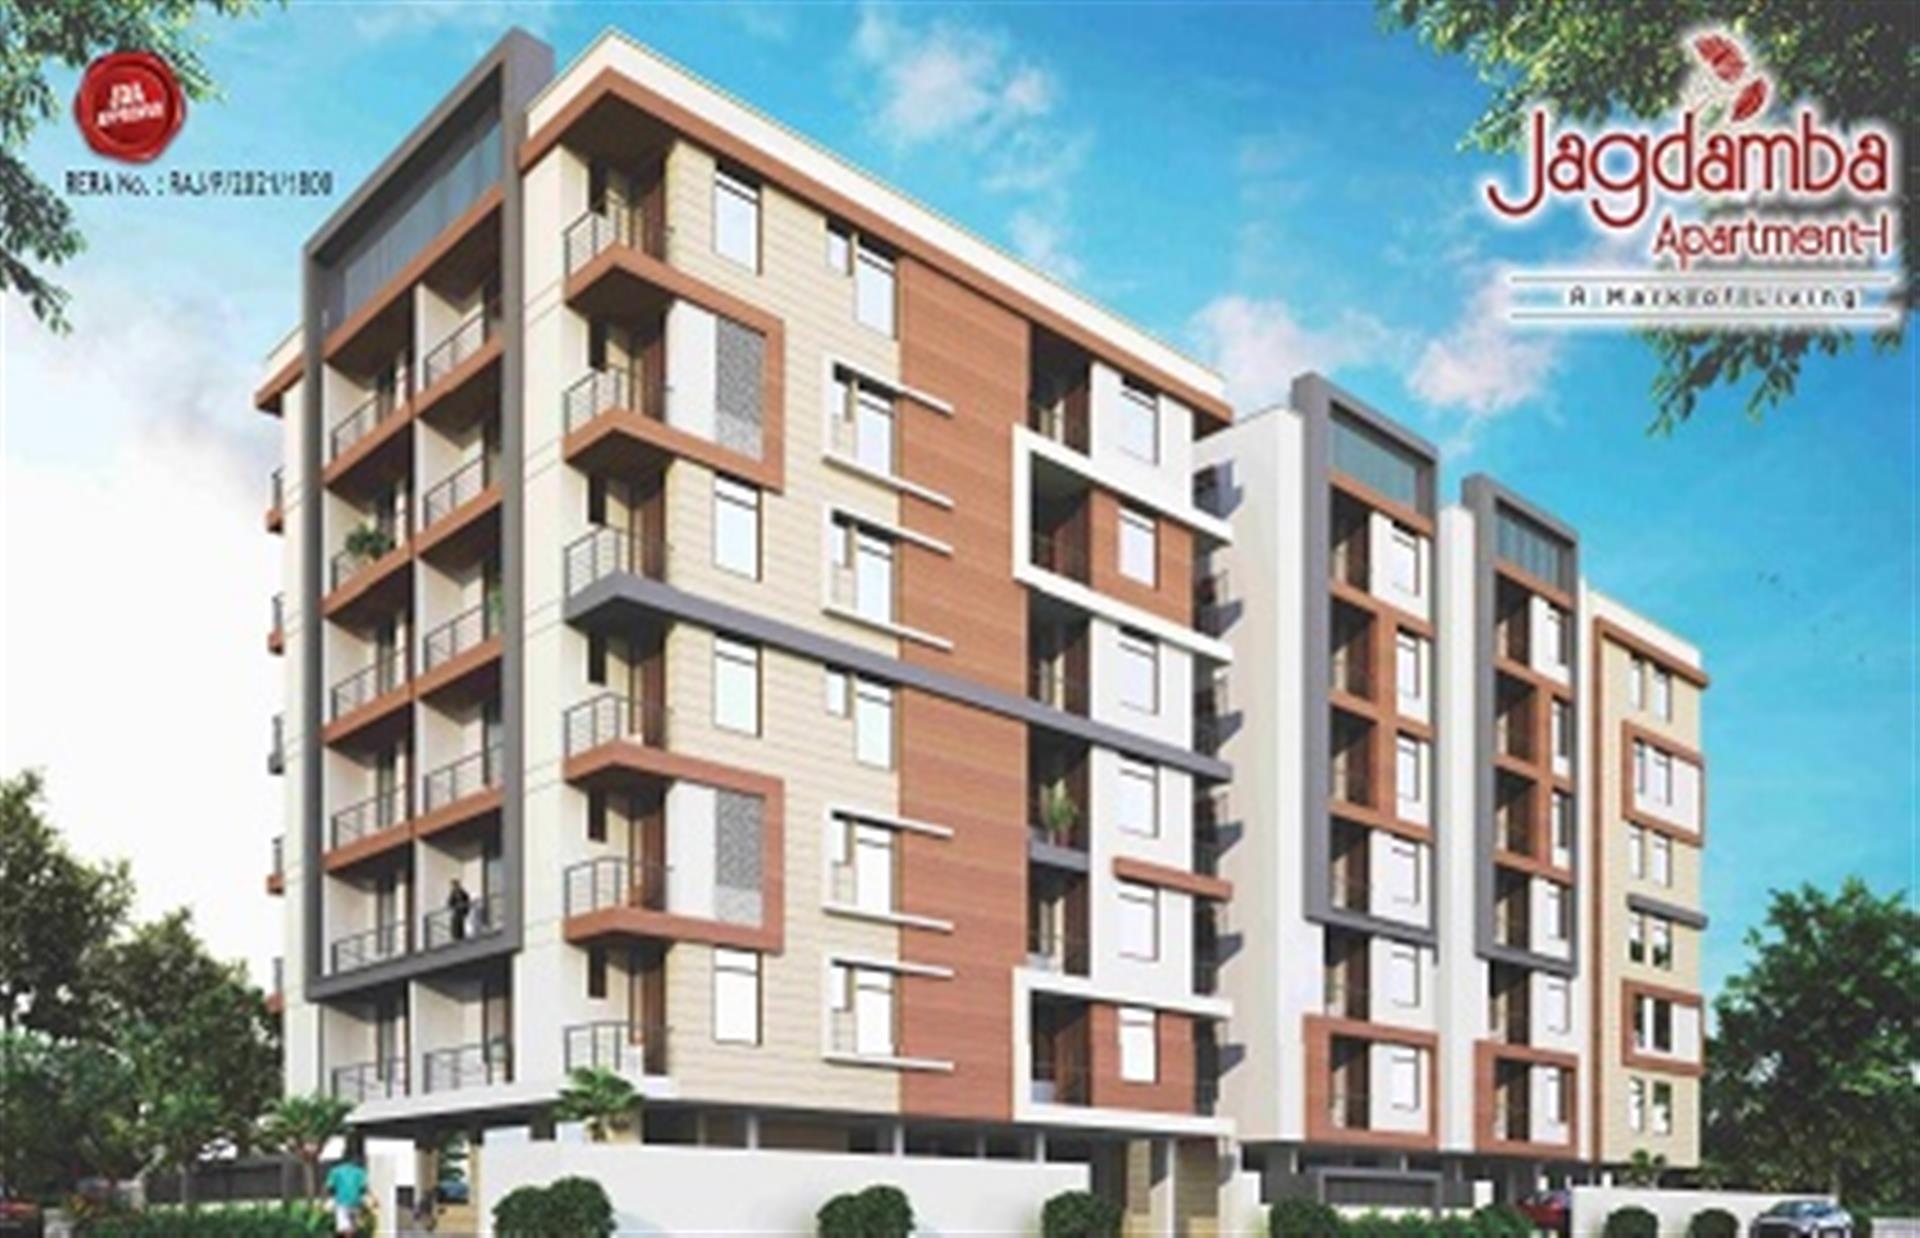 jagdamba-apartment-mansarovar-extension-jaipur-3-bhk-apartment